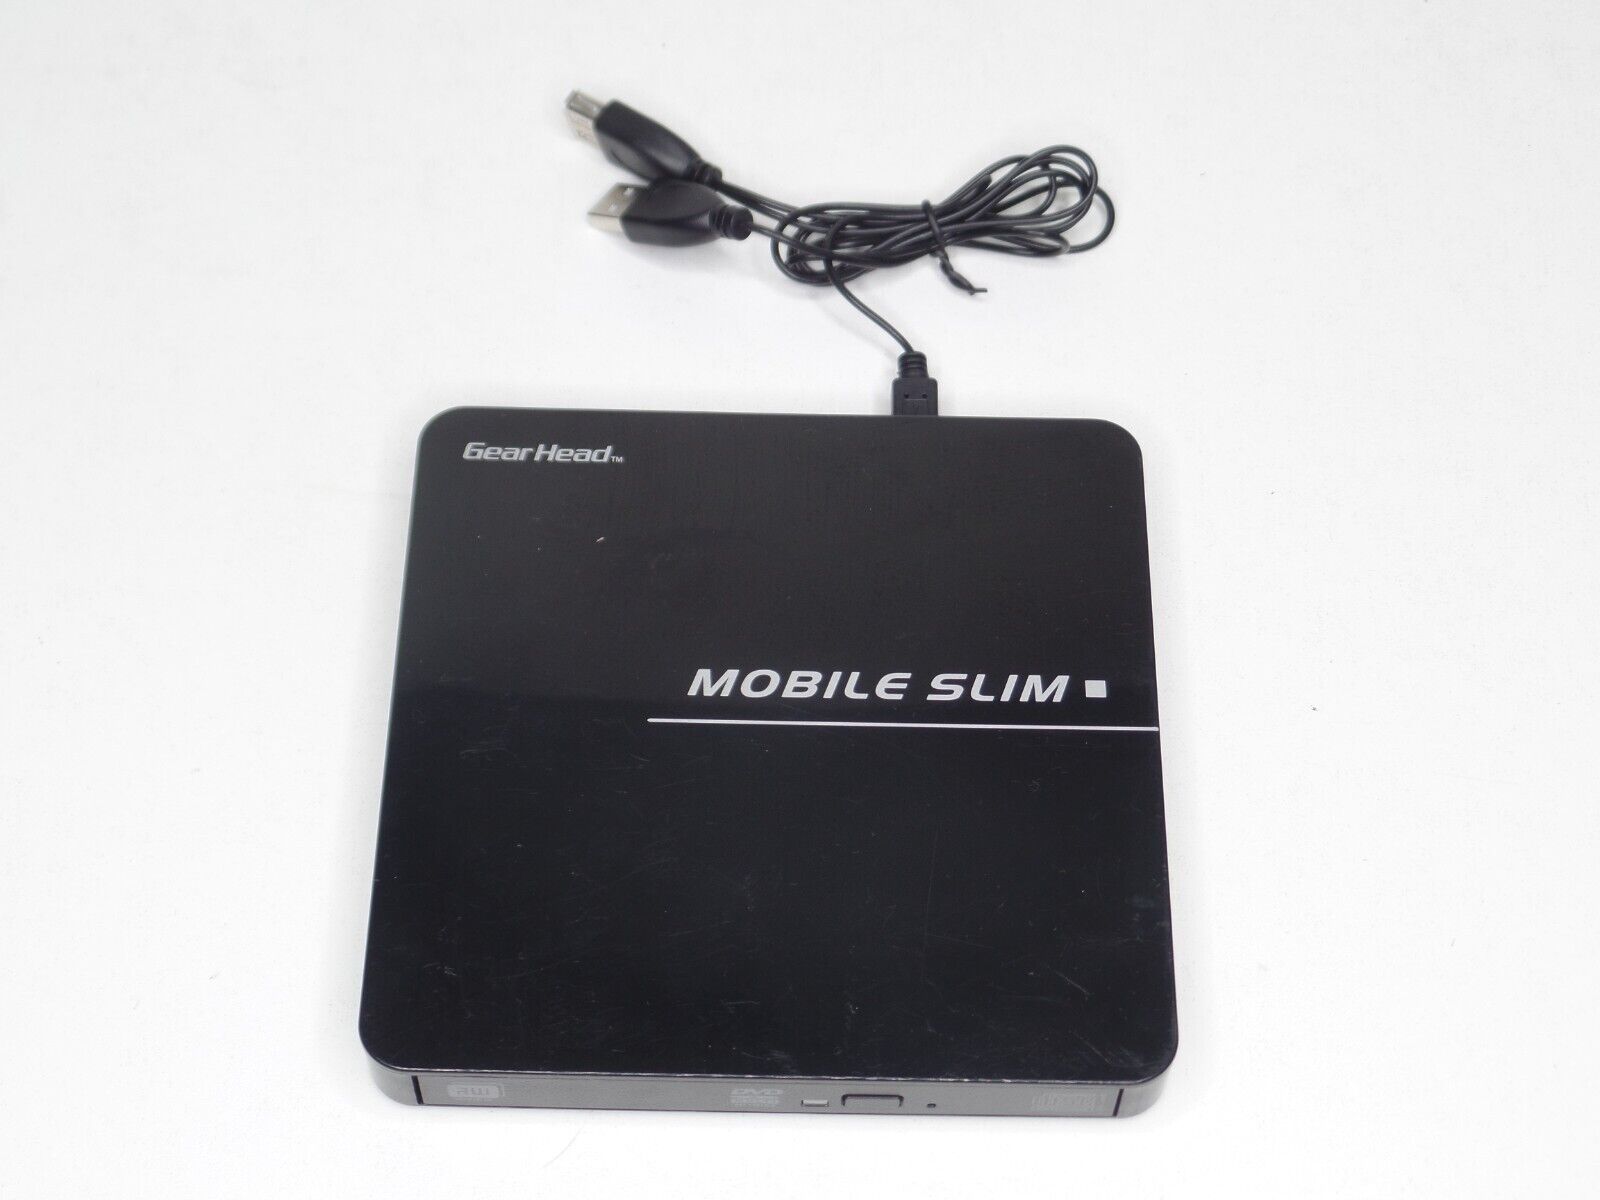 Gear Head Mobile Slim External Optical Drive Model CDSL07U2S Black Slim CD DVD